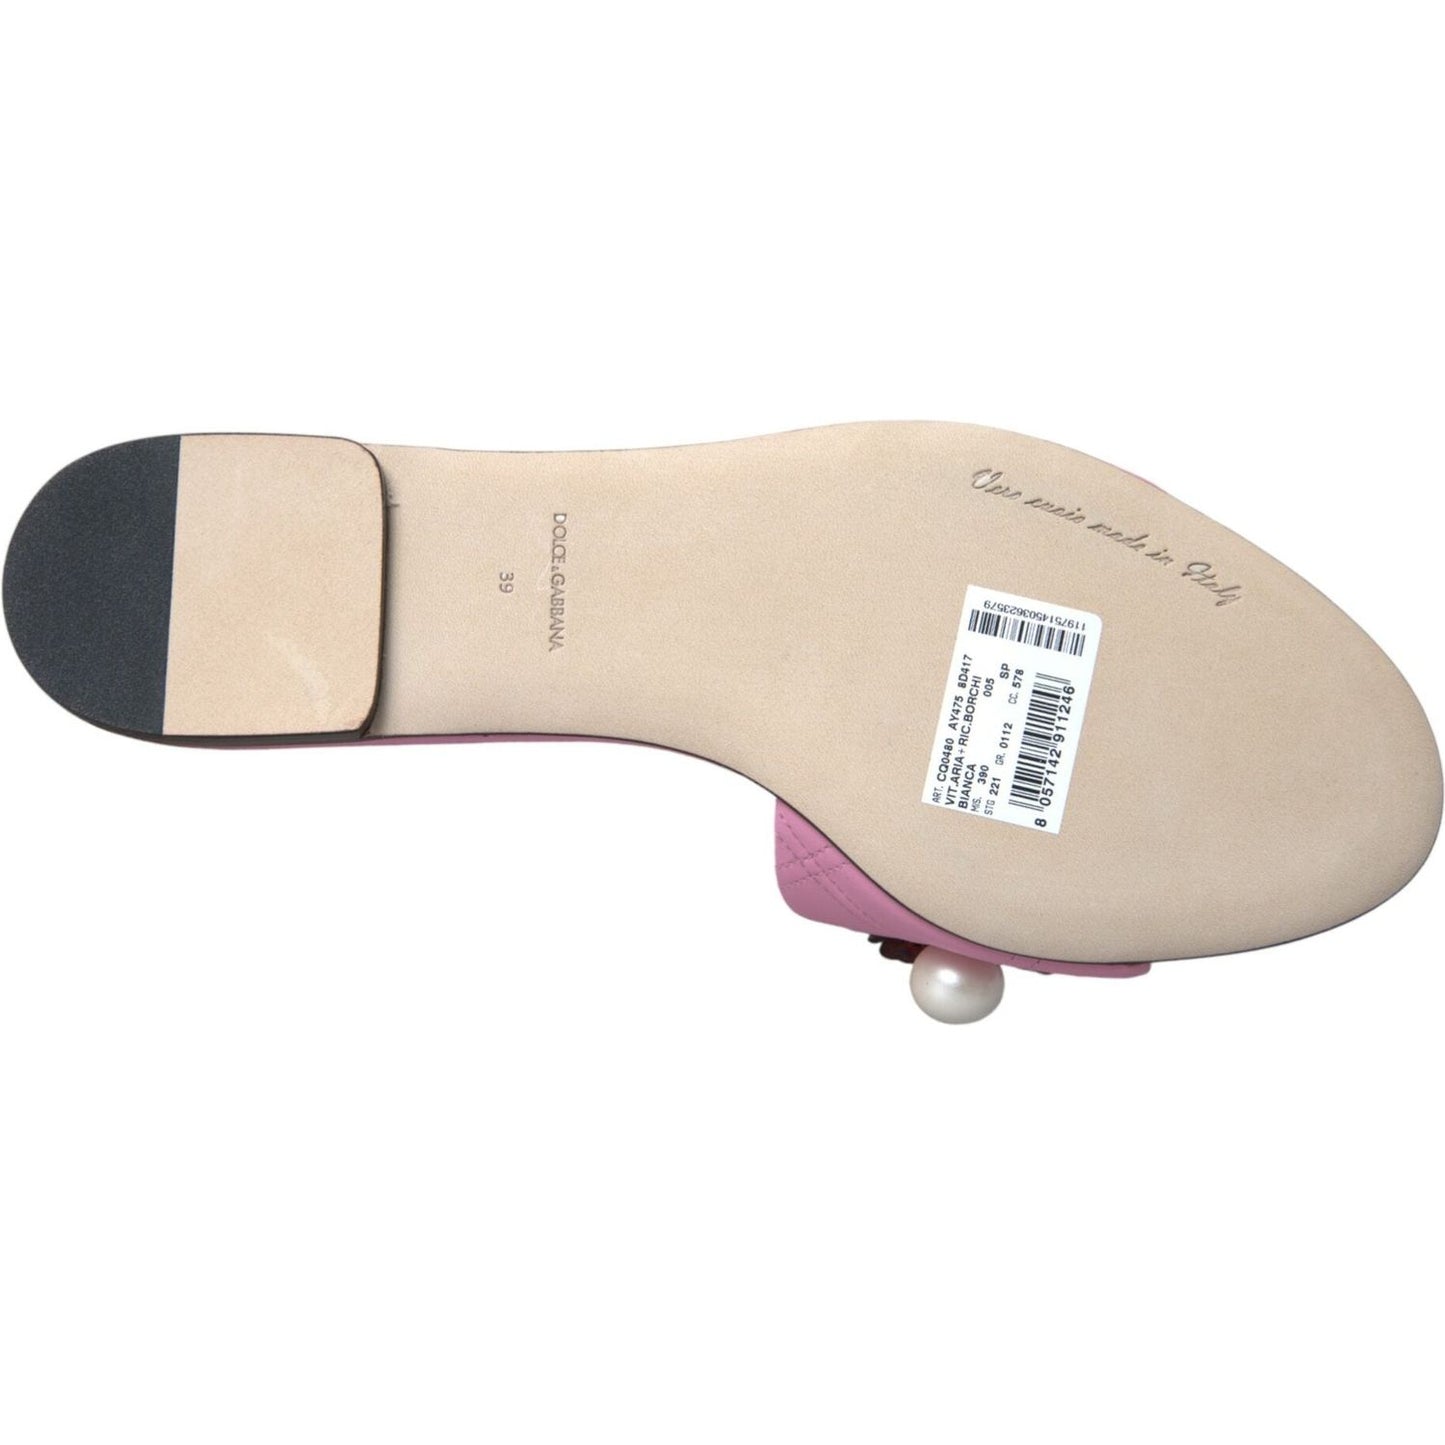 Dolce & Gabbana Pink Embellished Leather Flats Sandals Shoes pink-embellished-leather-flats-sandals-shoes-1